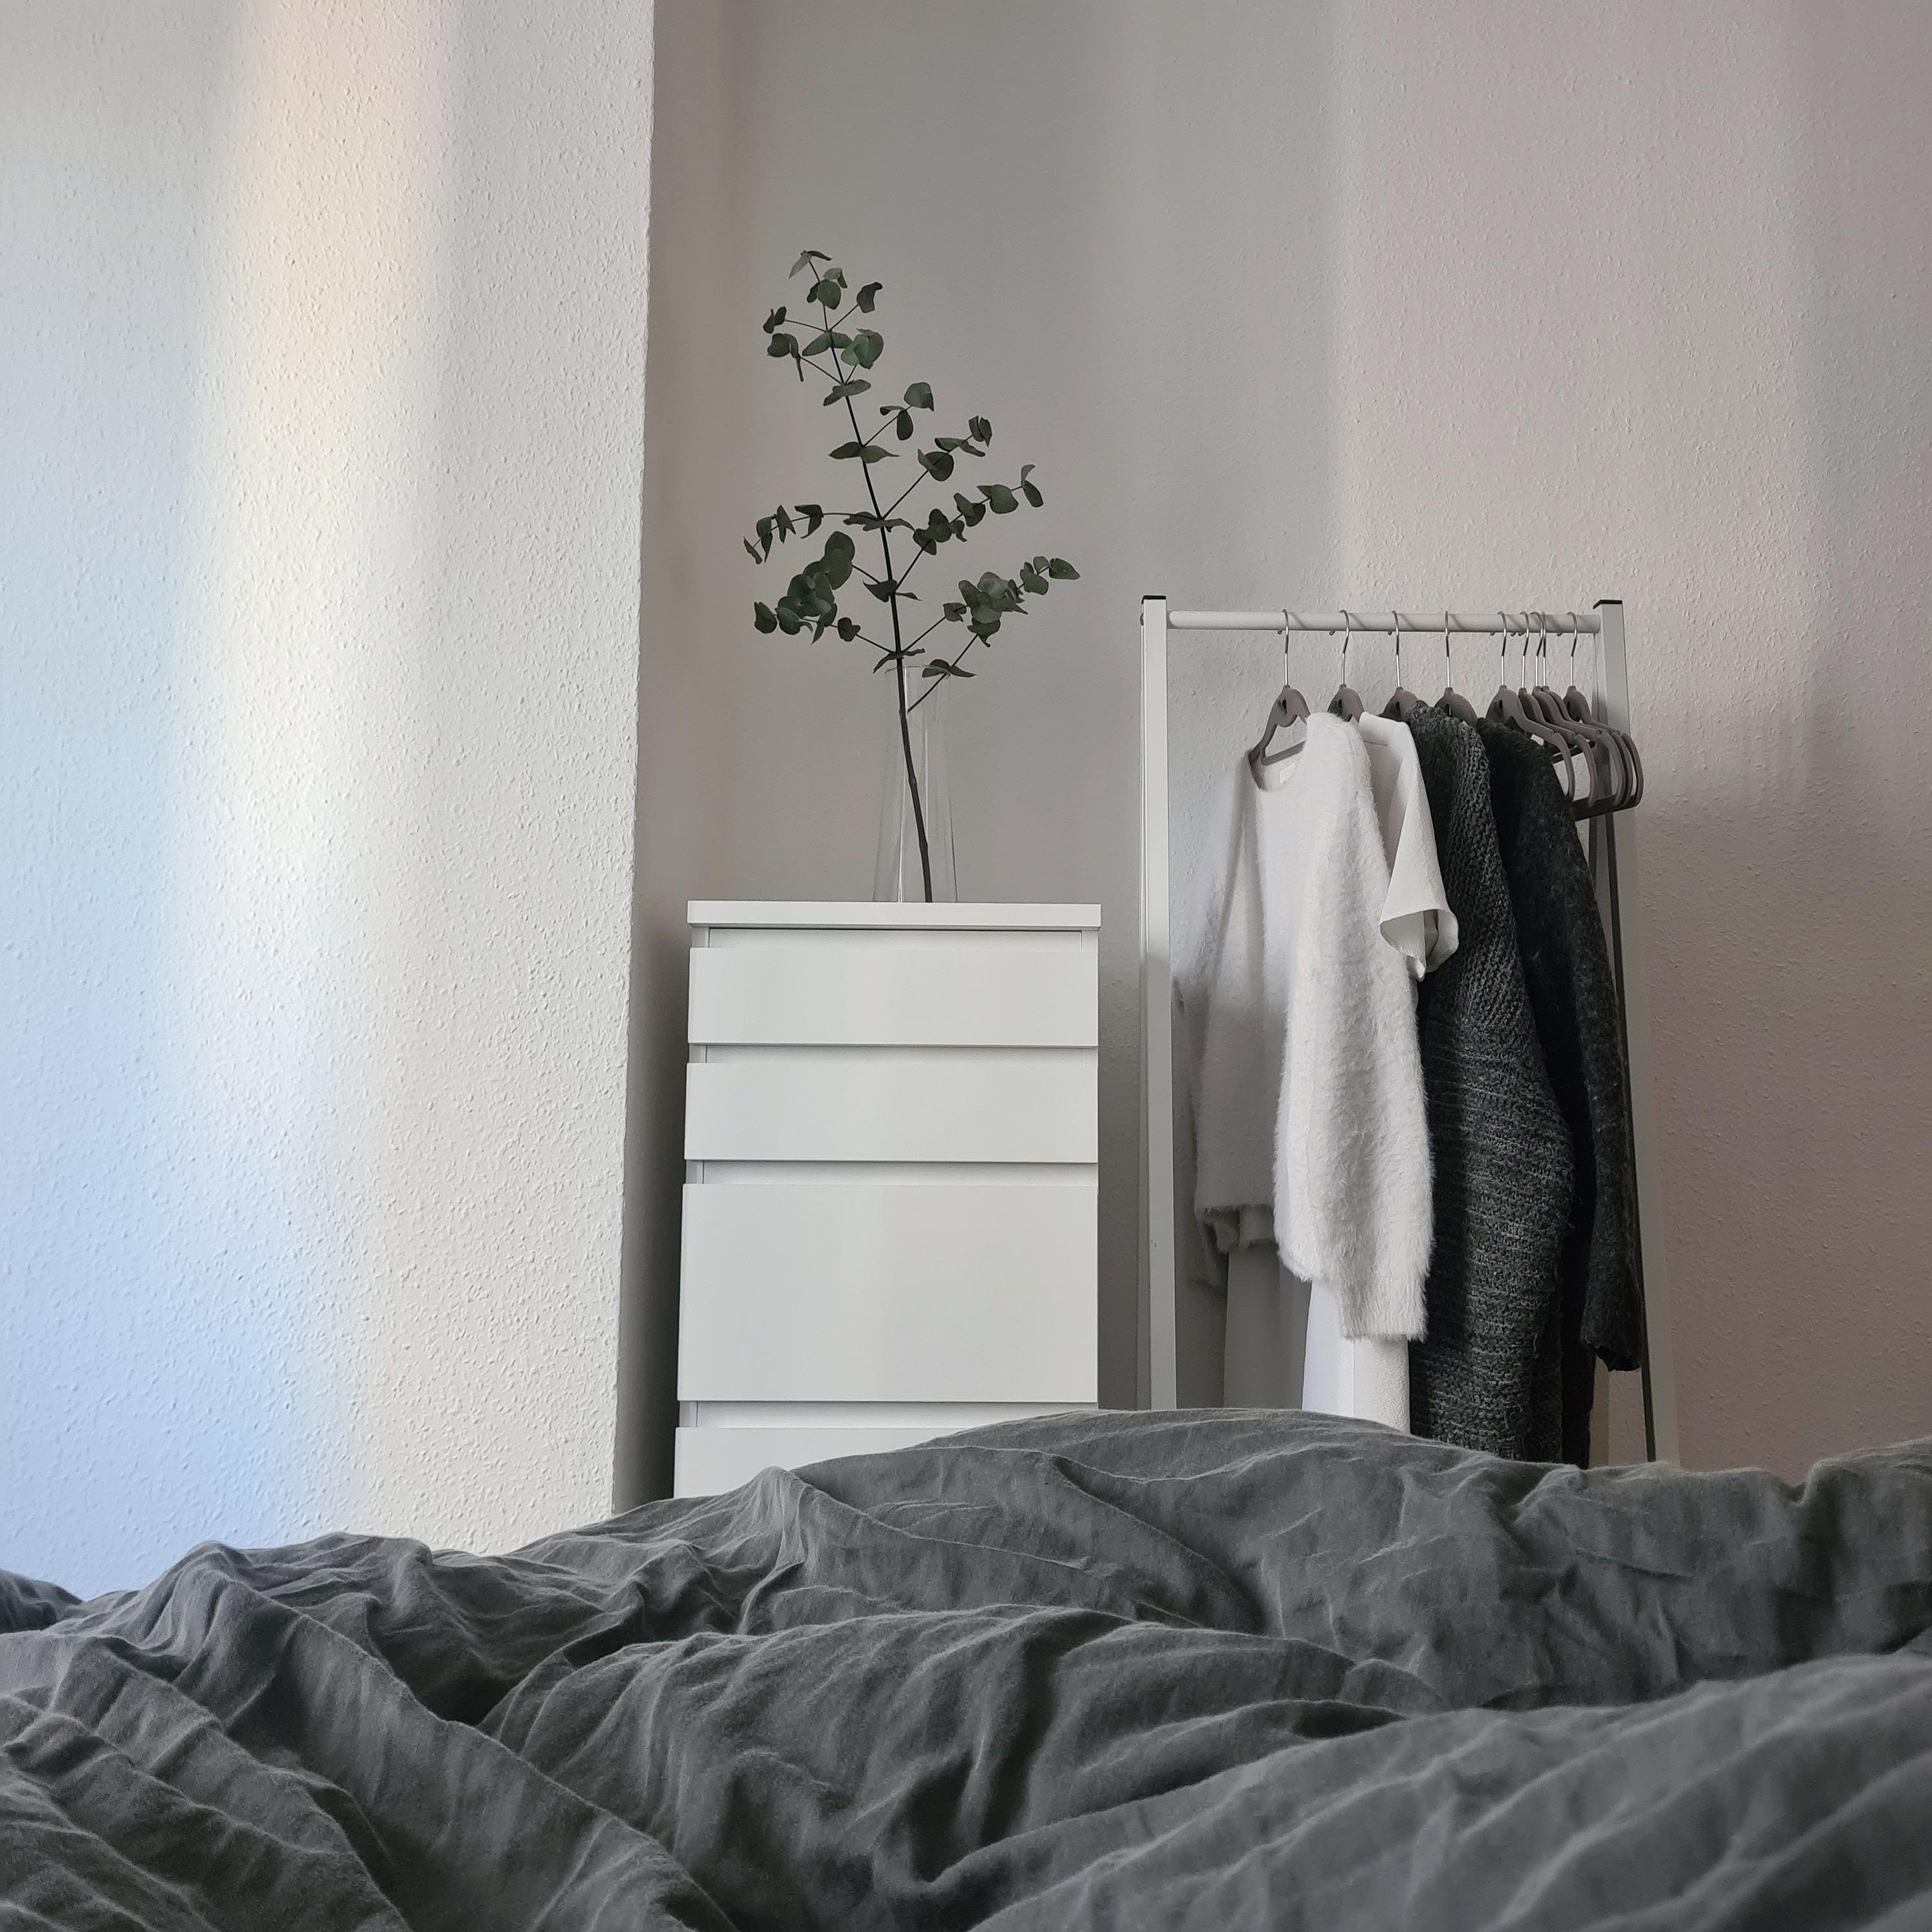 #bedroom #stayinbedallday #hygge #minimalism #cozyhome